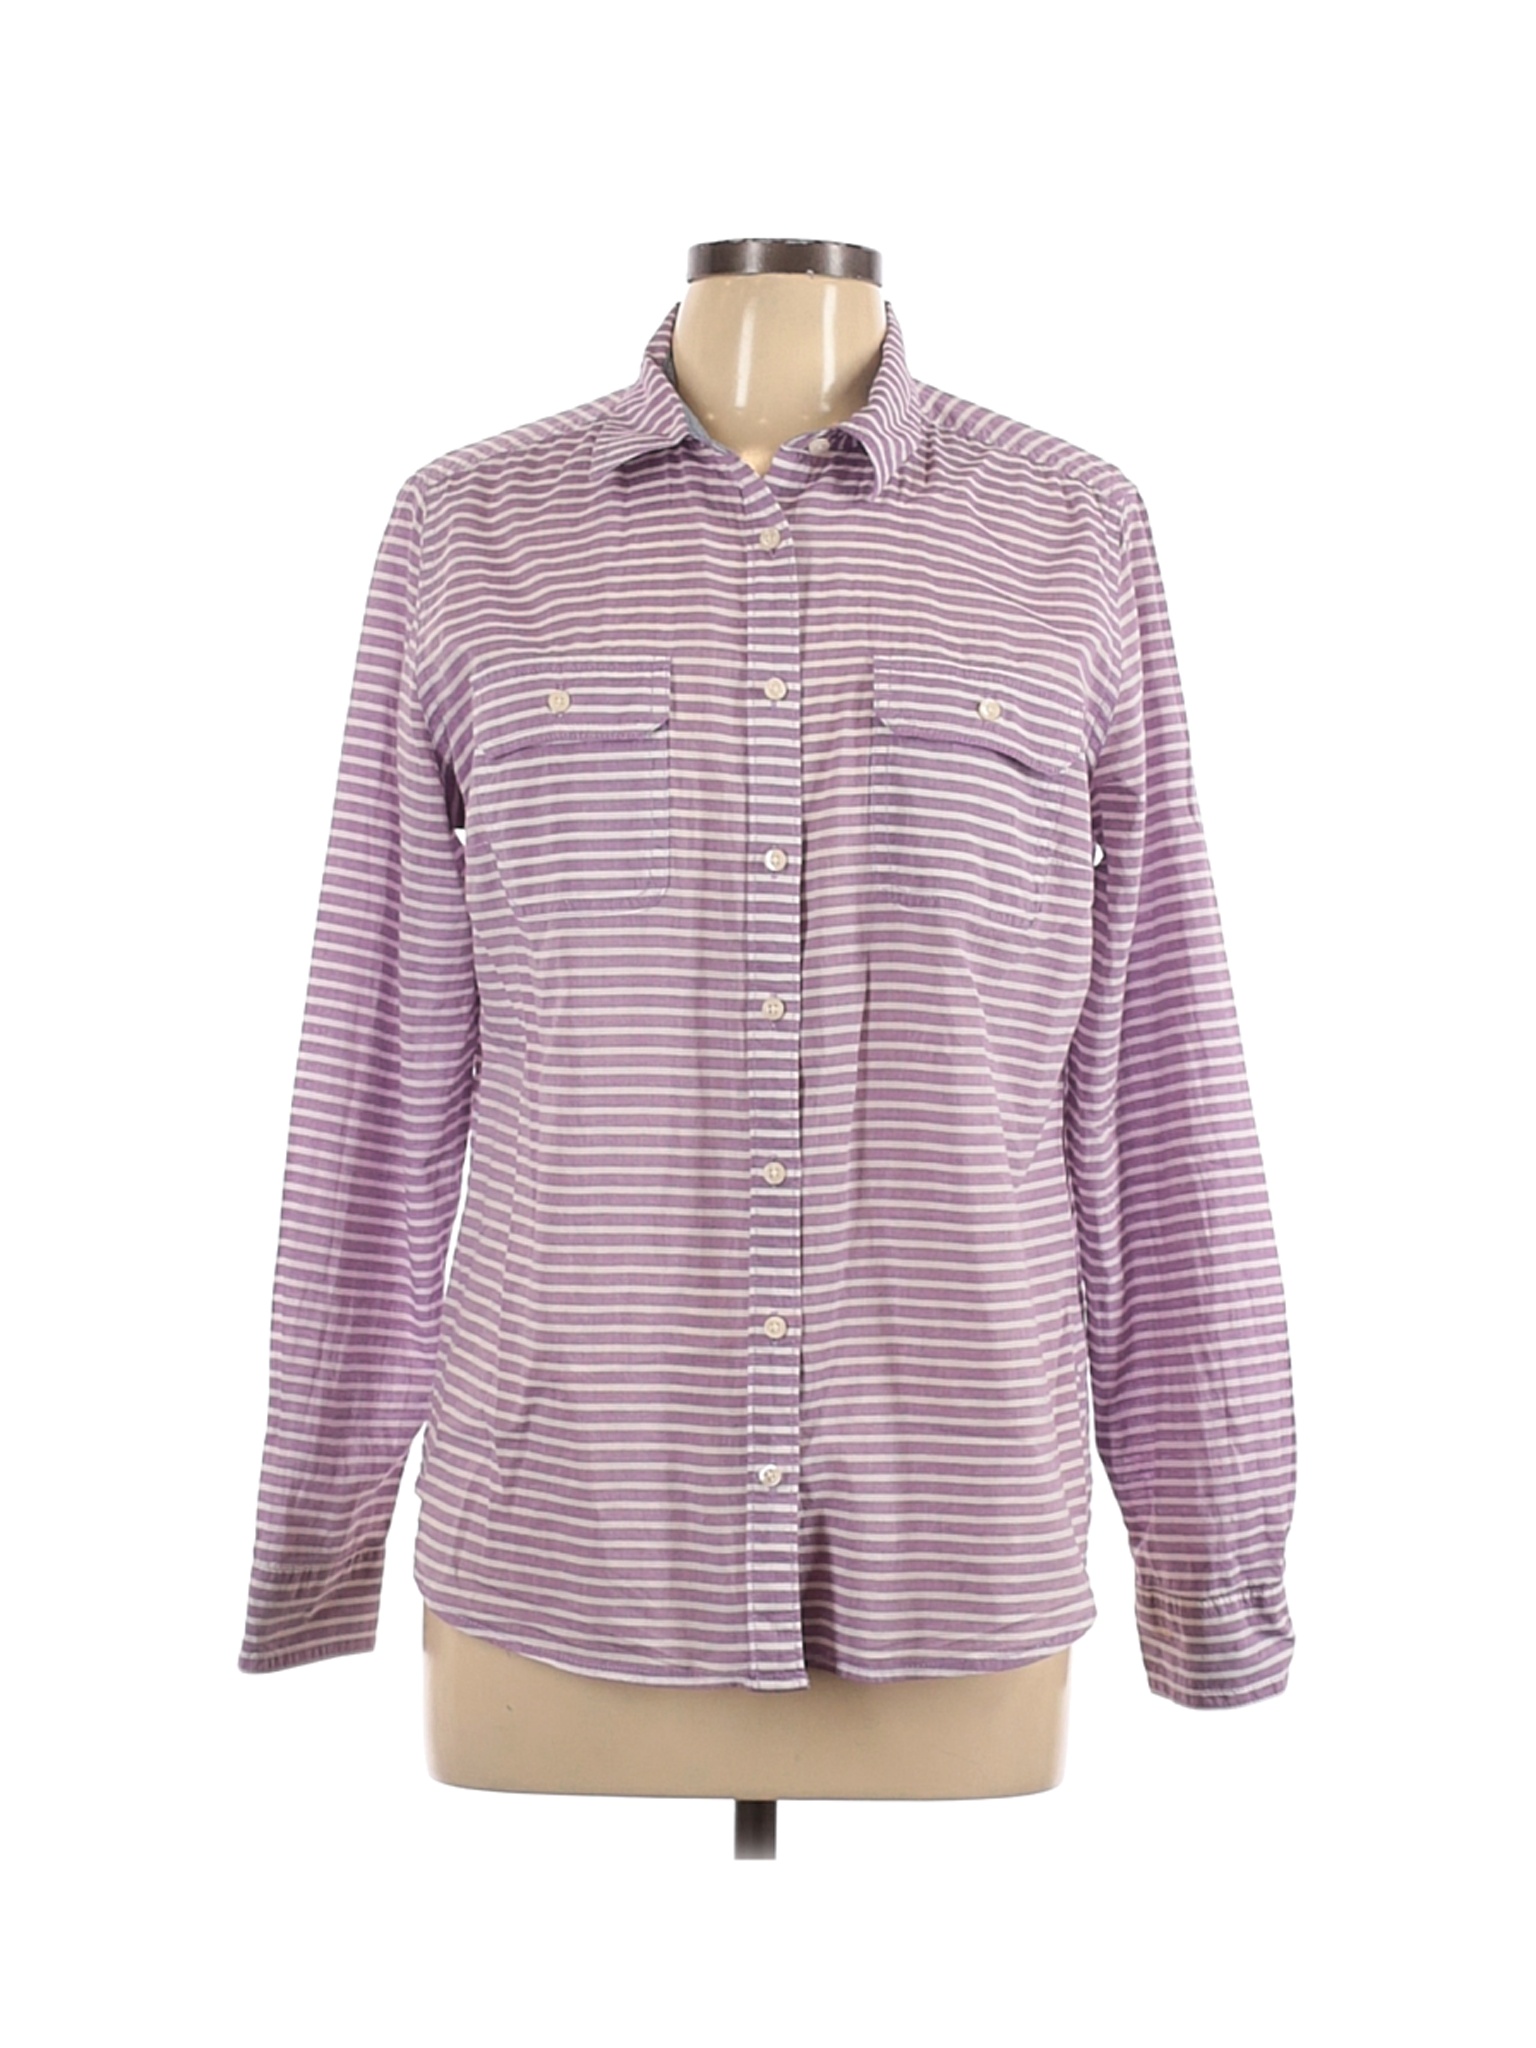 St. John's Bay Women Purple Long Sleeve Button-Down Shirt L | eBay